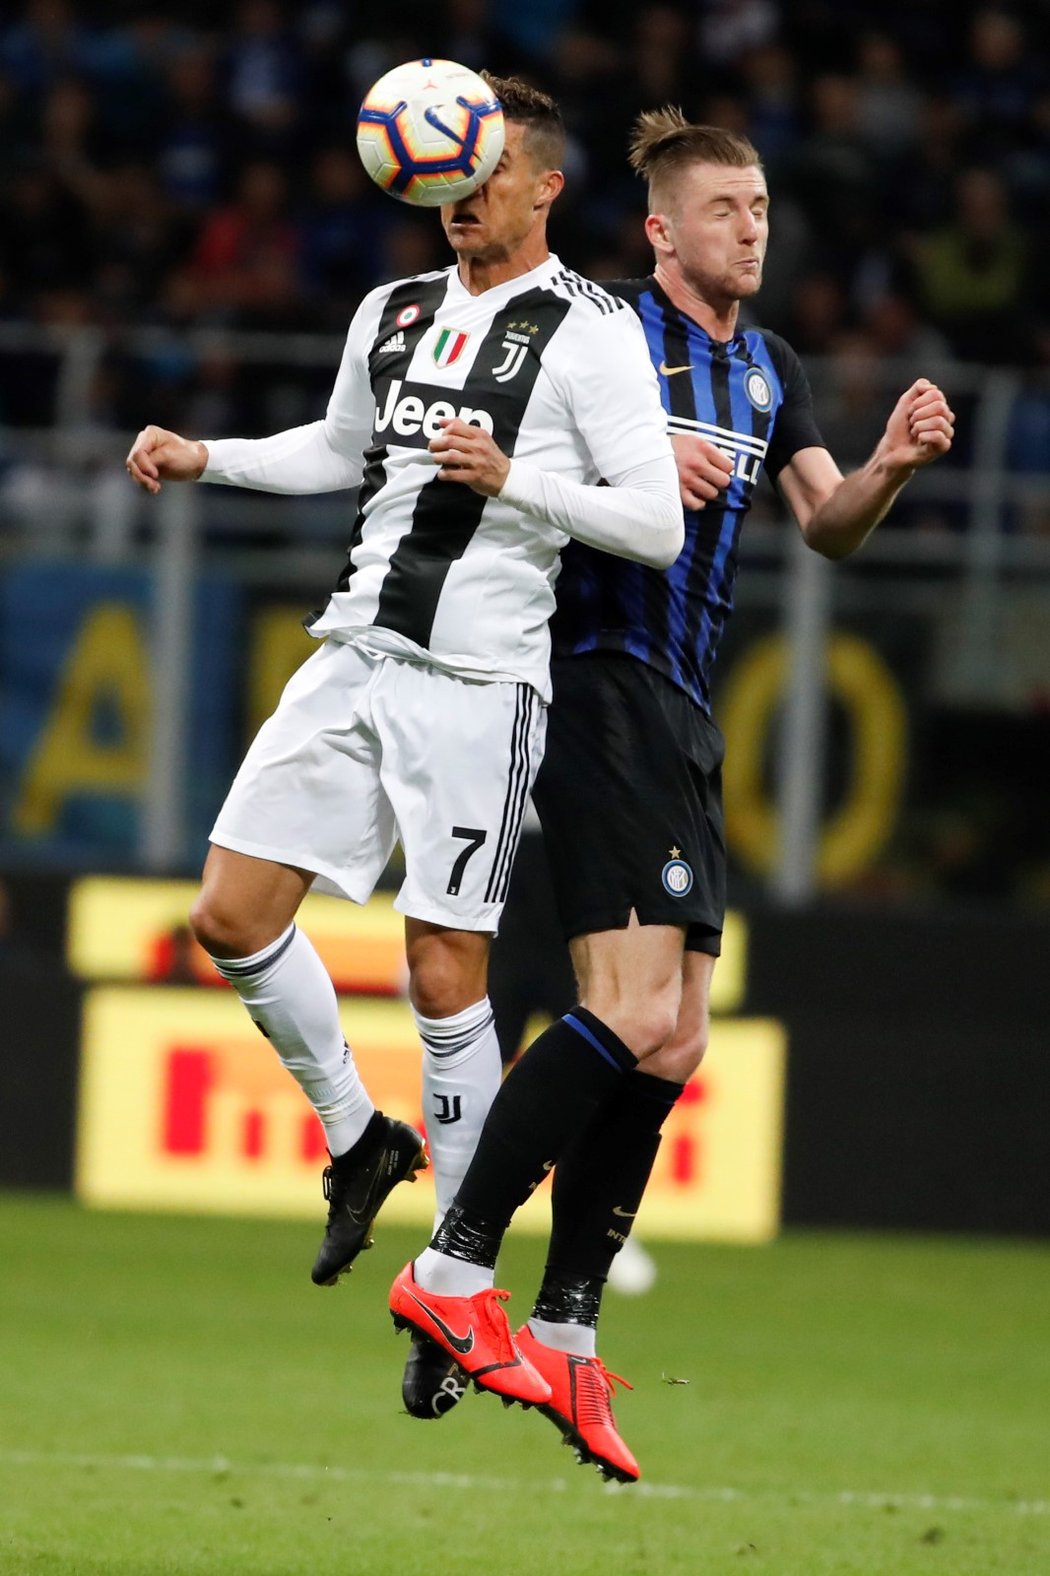 Hvězda Juventusu Cristiano Ronaldo v souboji se slovenským obráncem Interu Milanem Škriniarem